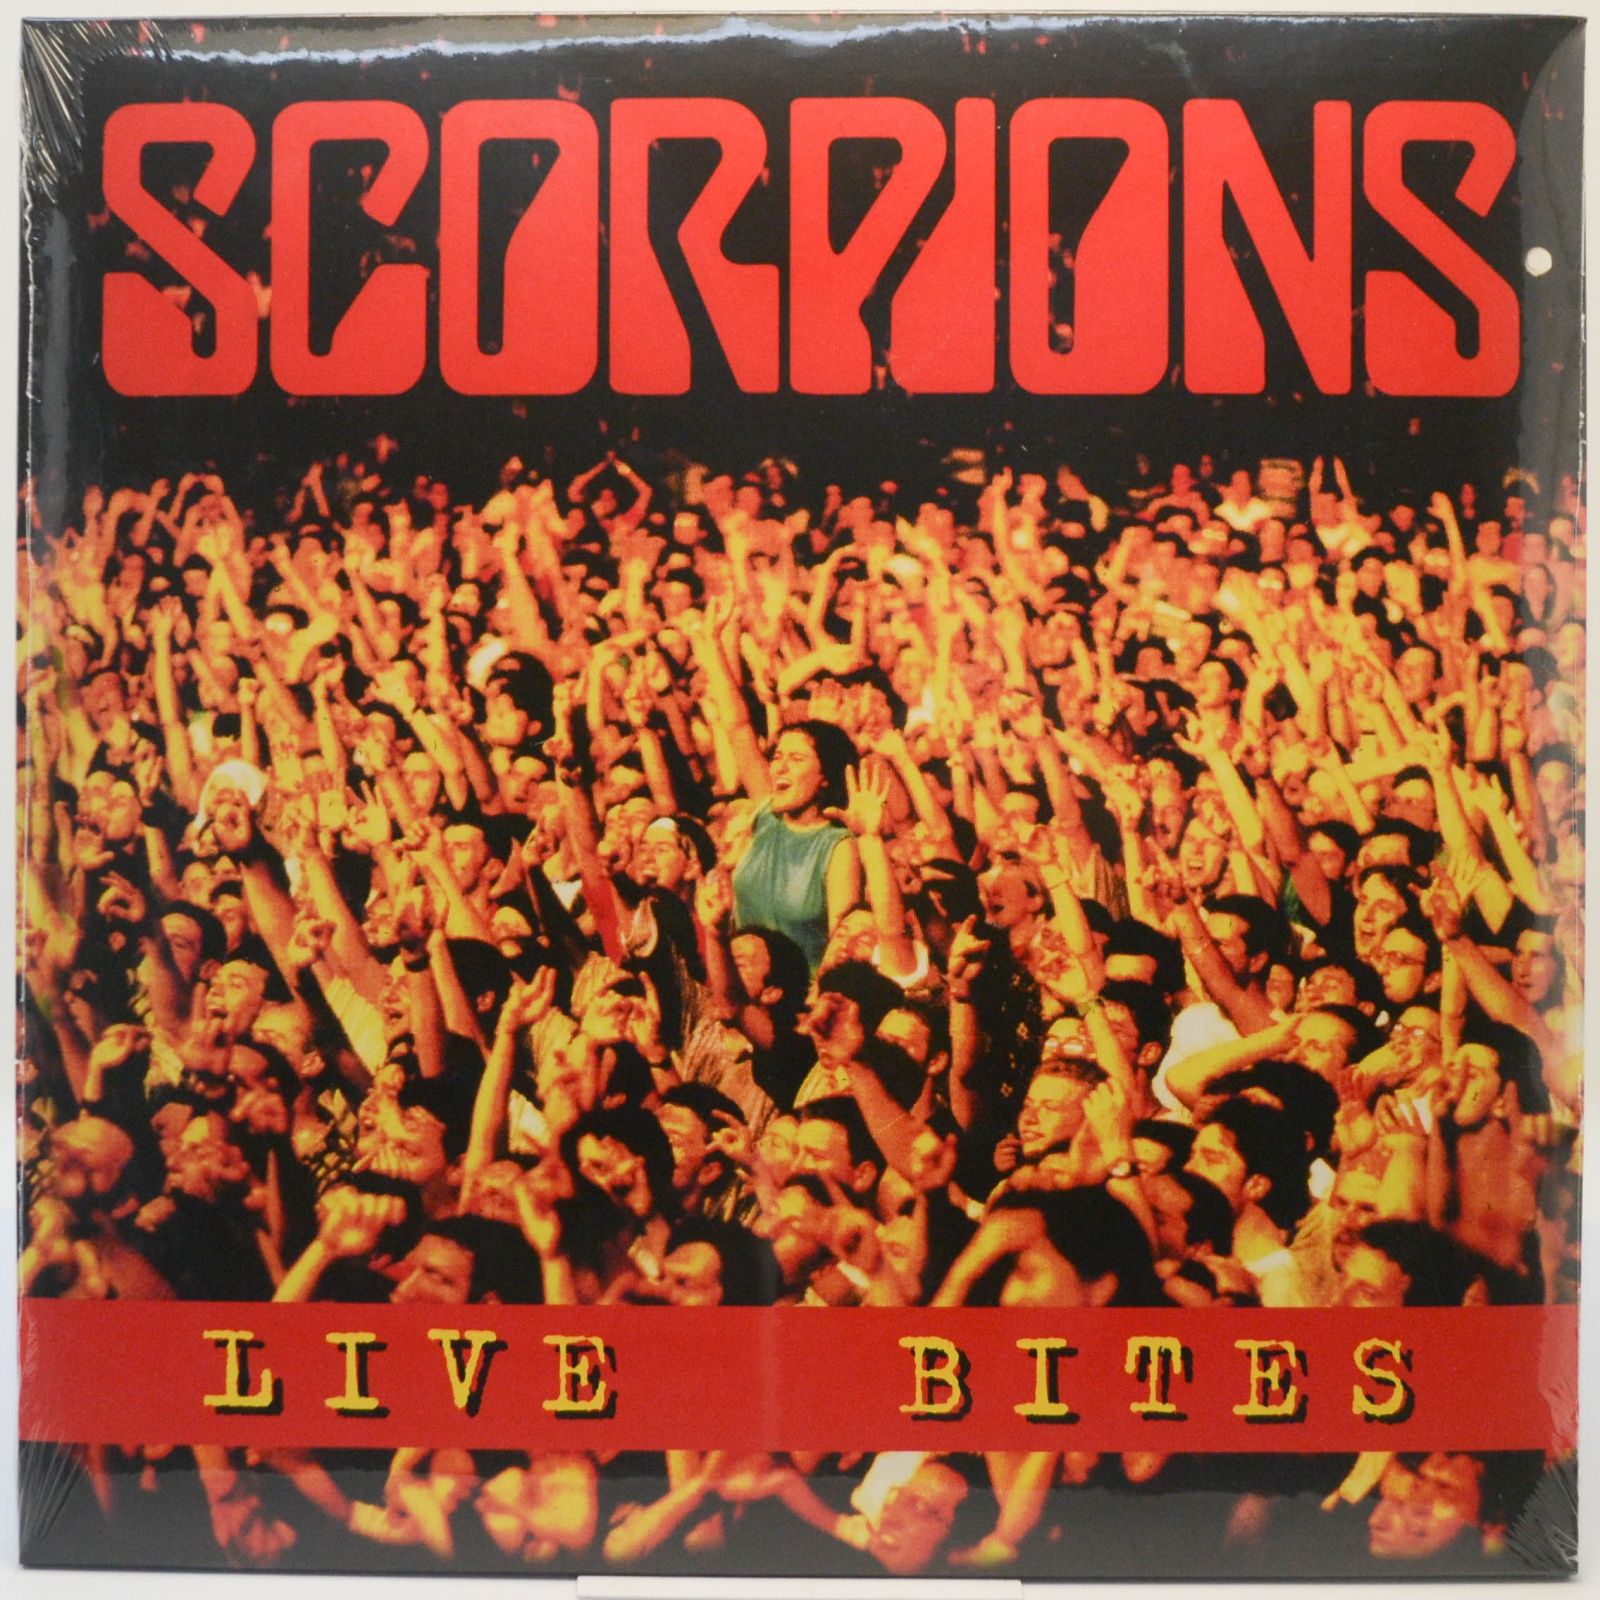 Scorpions — Live Bites, 2019